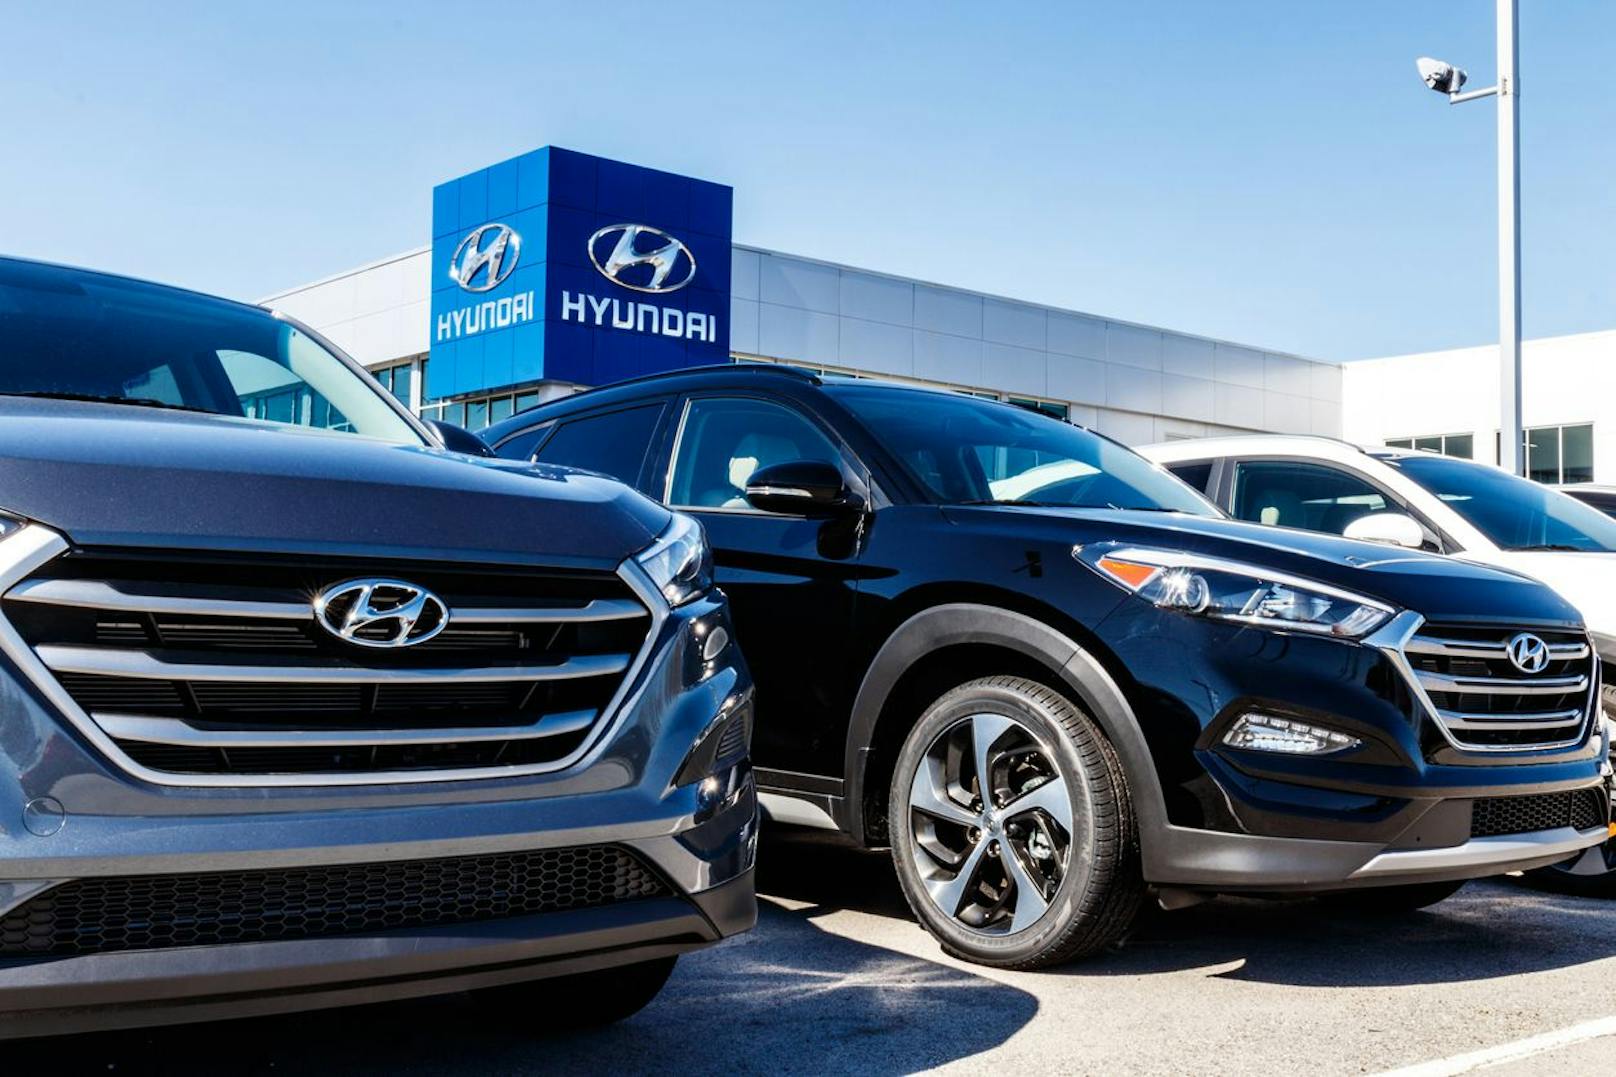 Hyundai ruft knapp 240.000 Fahrzeuge zurück.